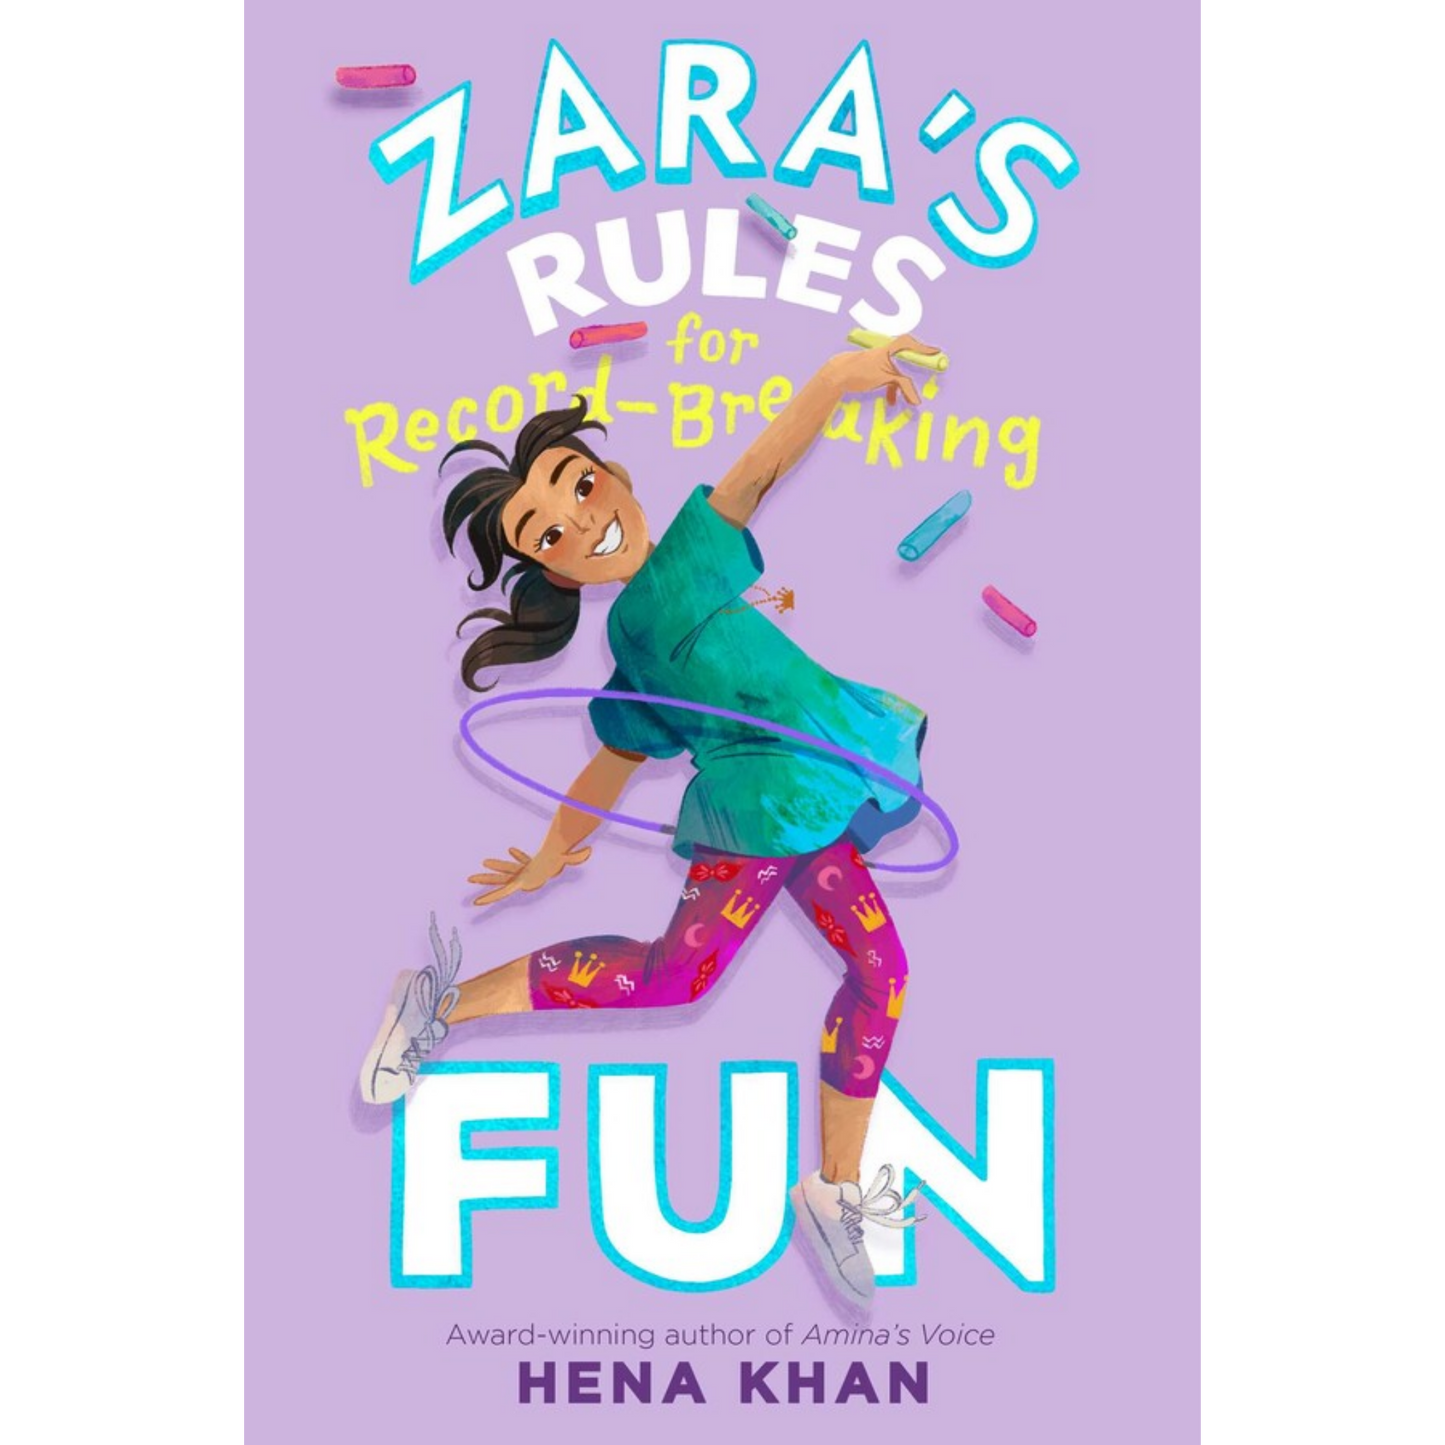 zaras rules for record breaking fun hena khan